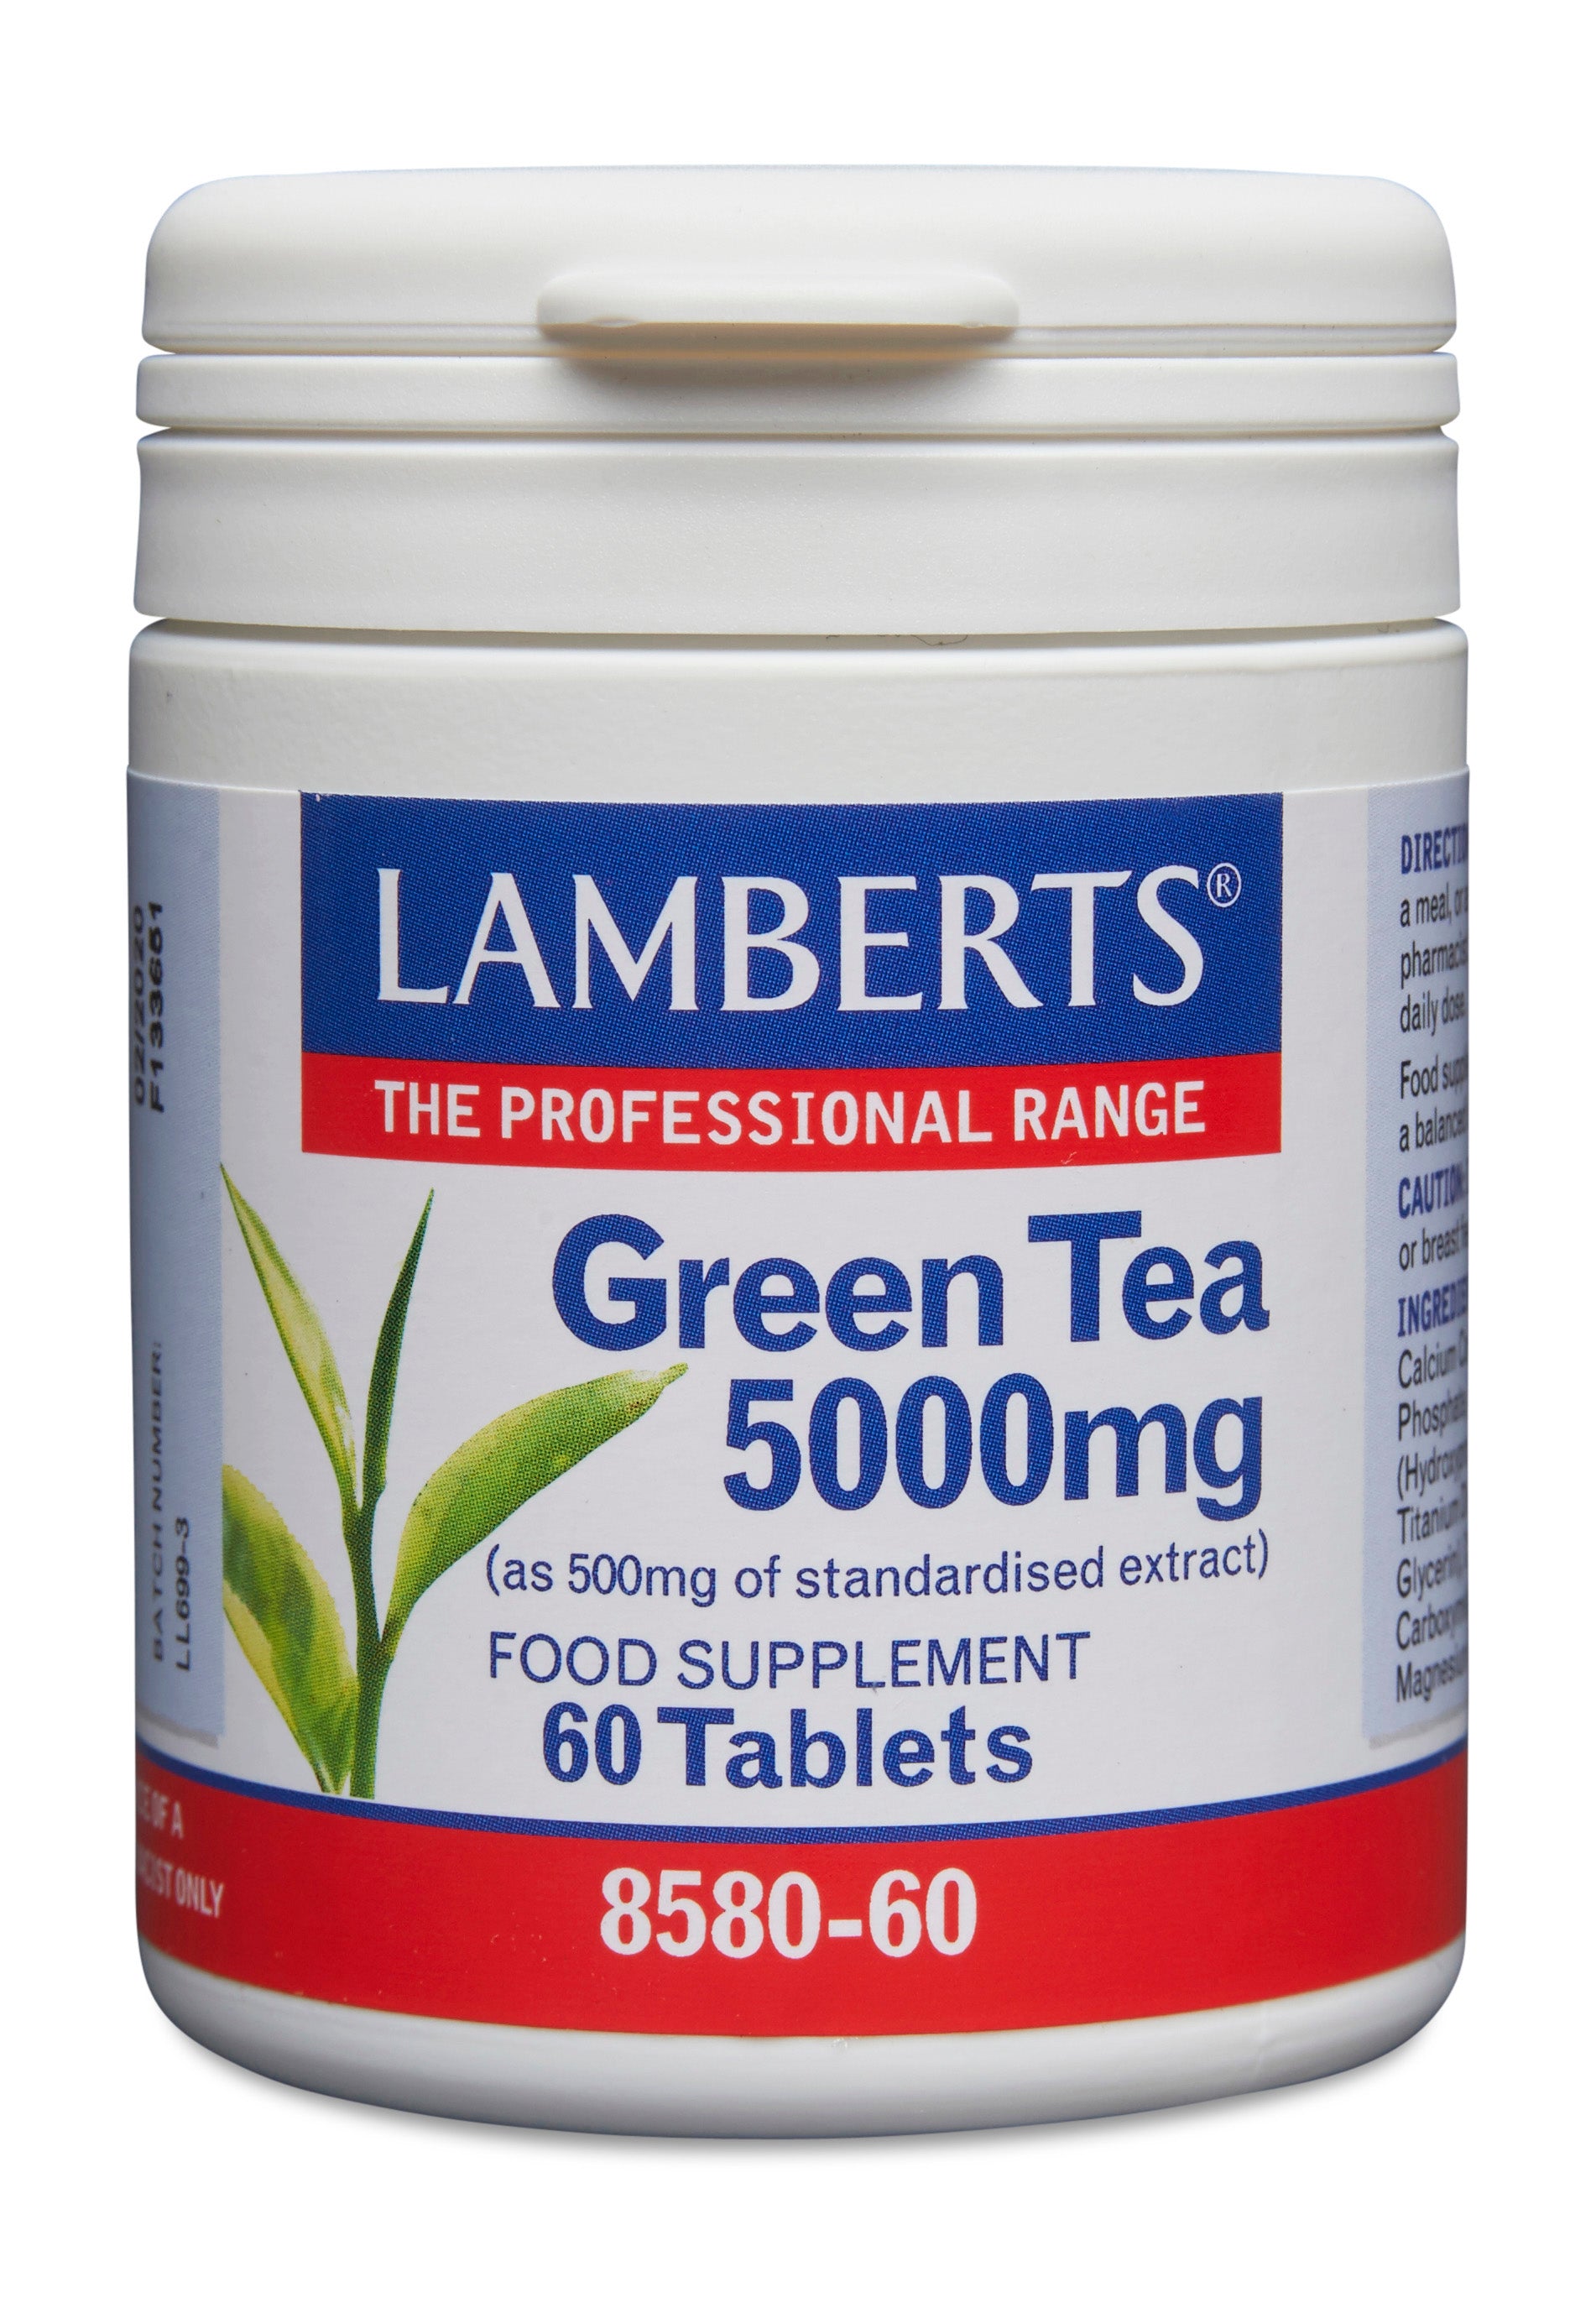 lamberts - 60 Tablets Green Tea 5000mg